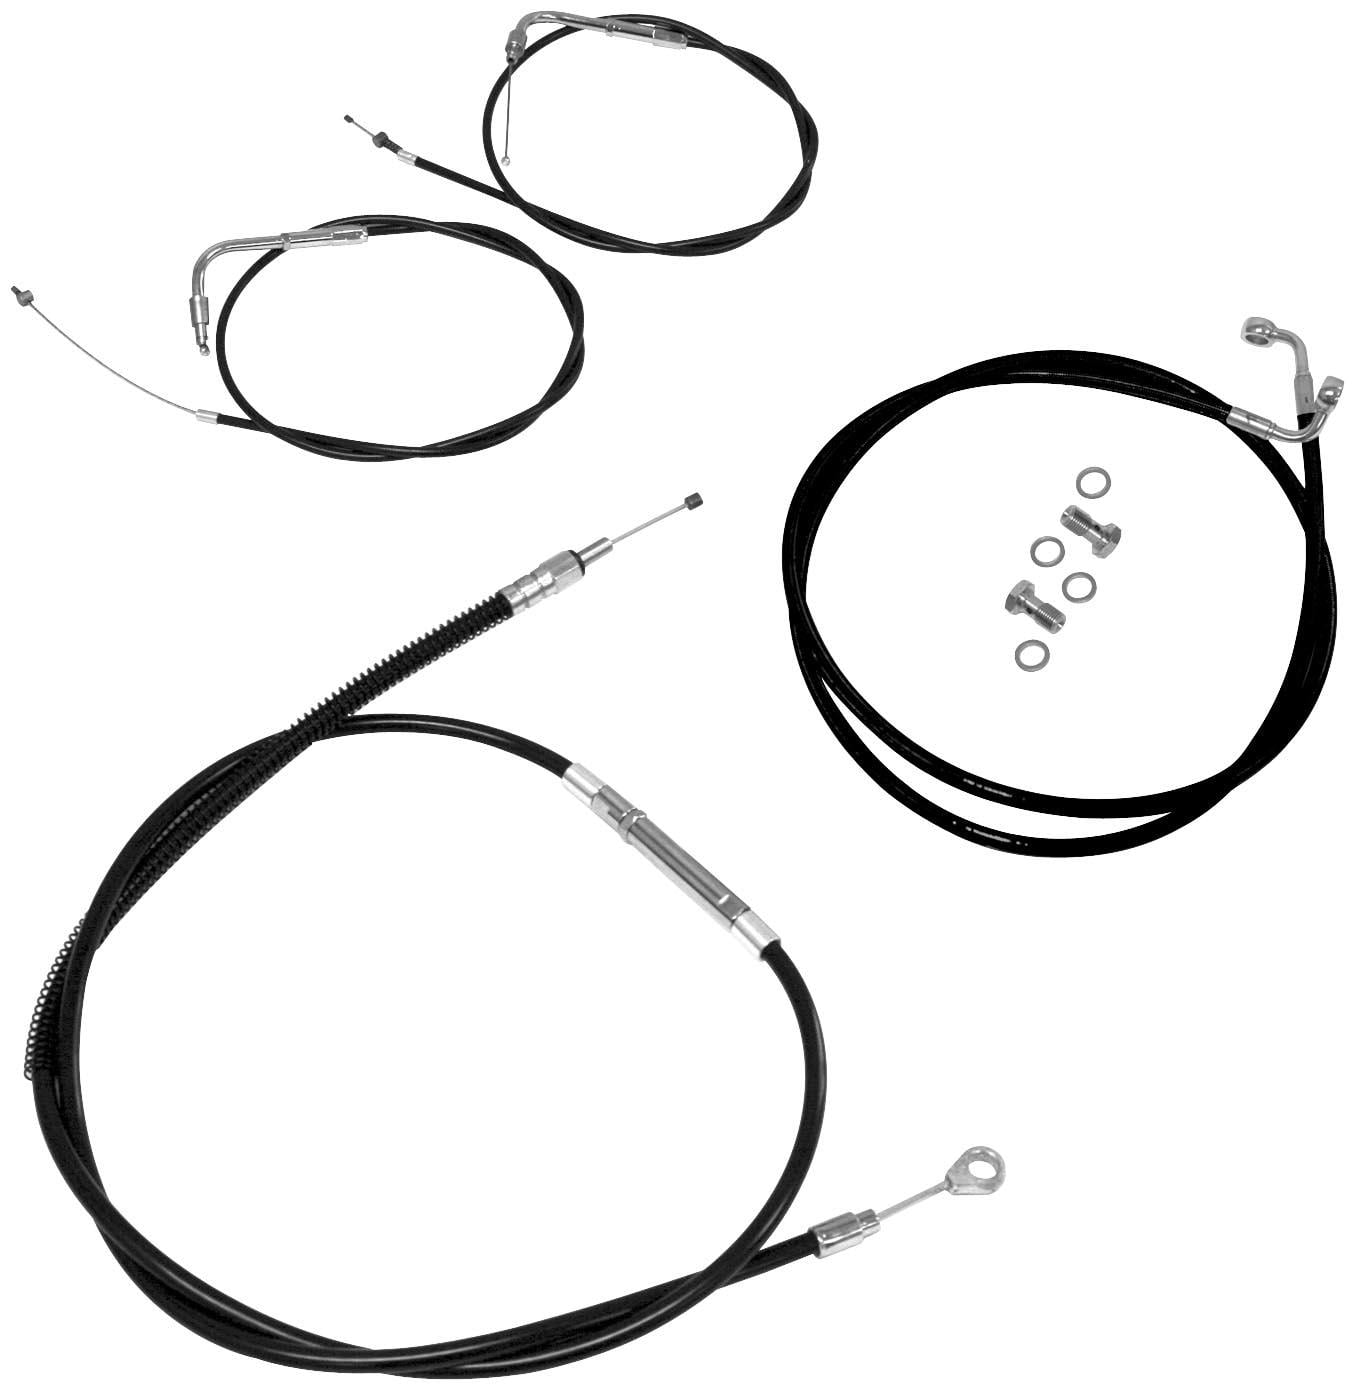 Progressive Suspension Cable and Brake Line Kit for 16in Black B30-1038 Ape Hangers